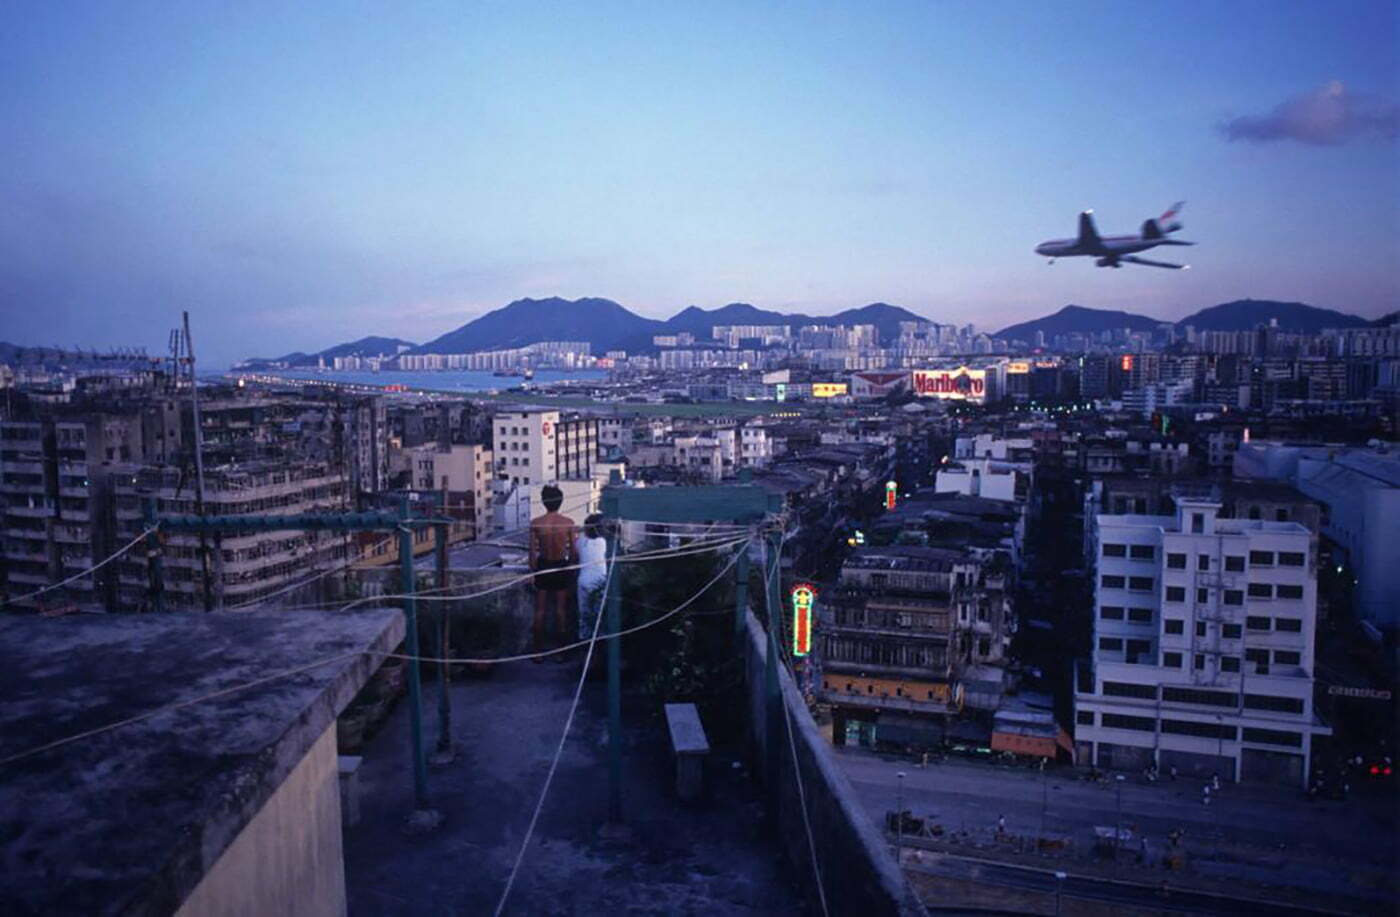 kowloon-watching-aircraft-land-at-kai-tak-airport-from-walled-city-rooftop-1990